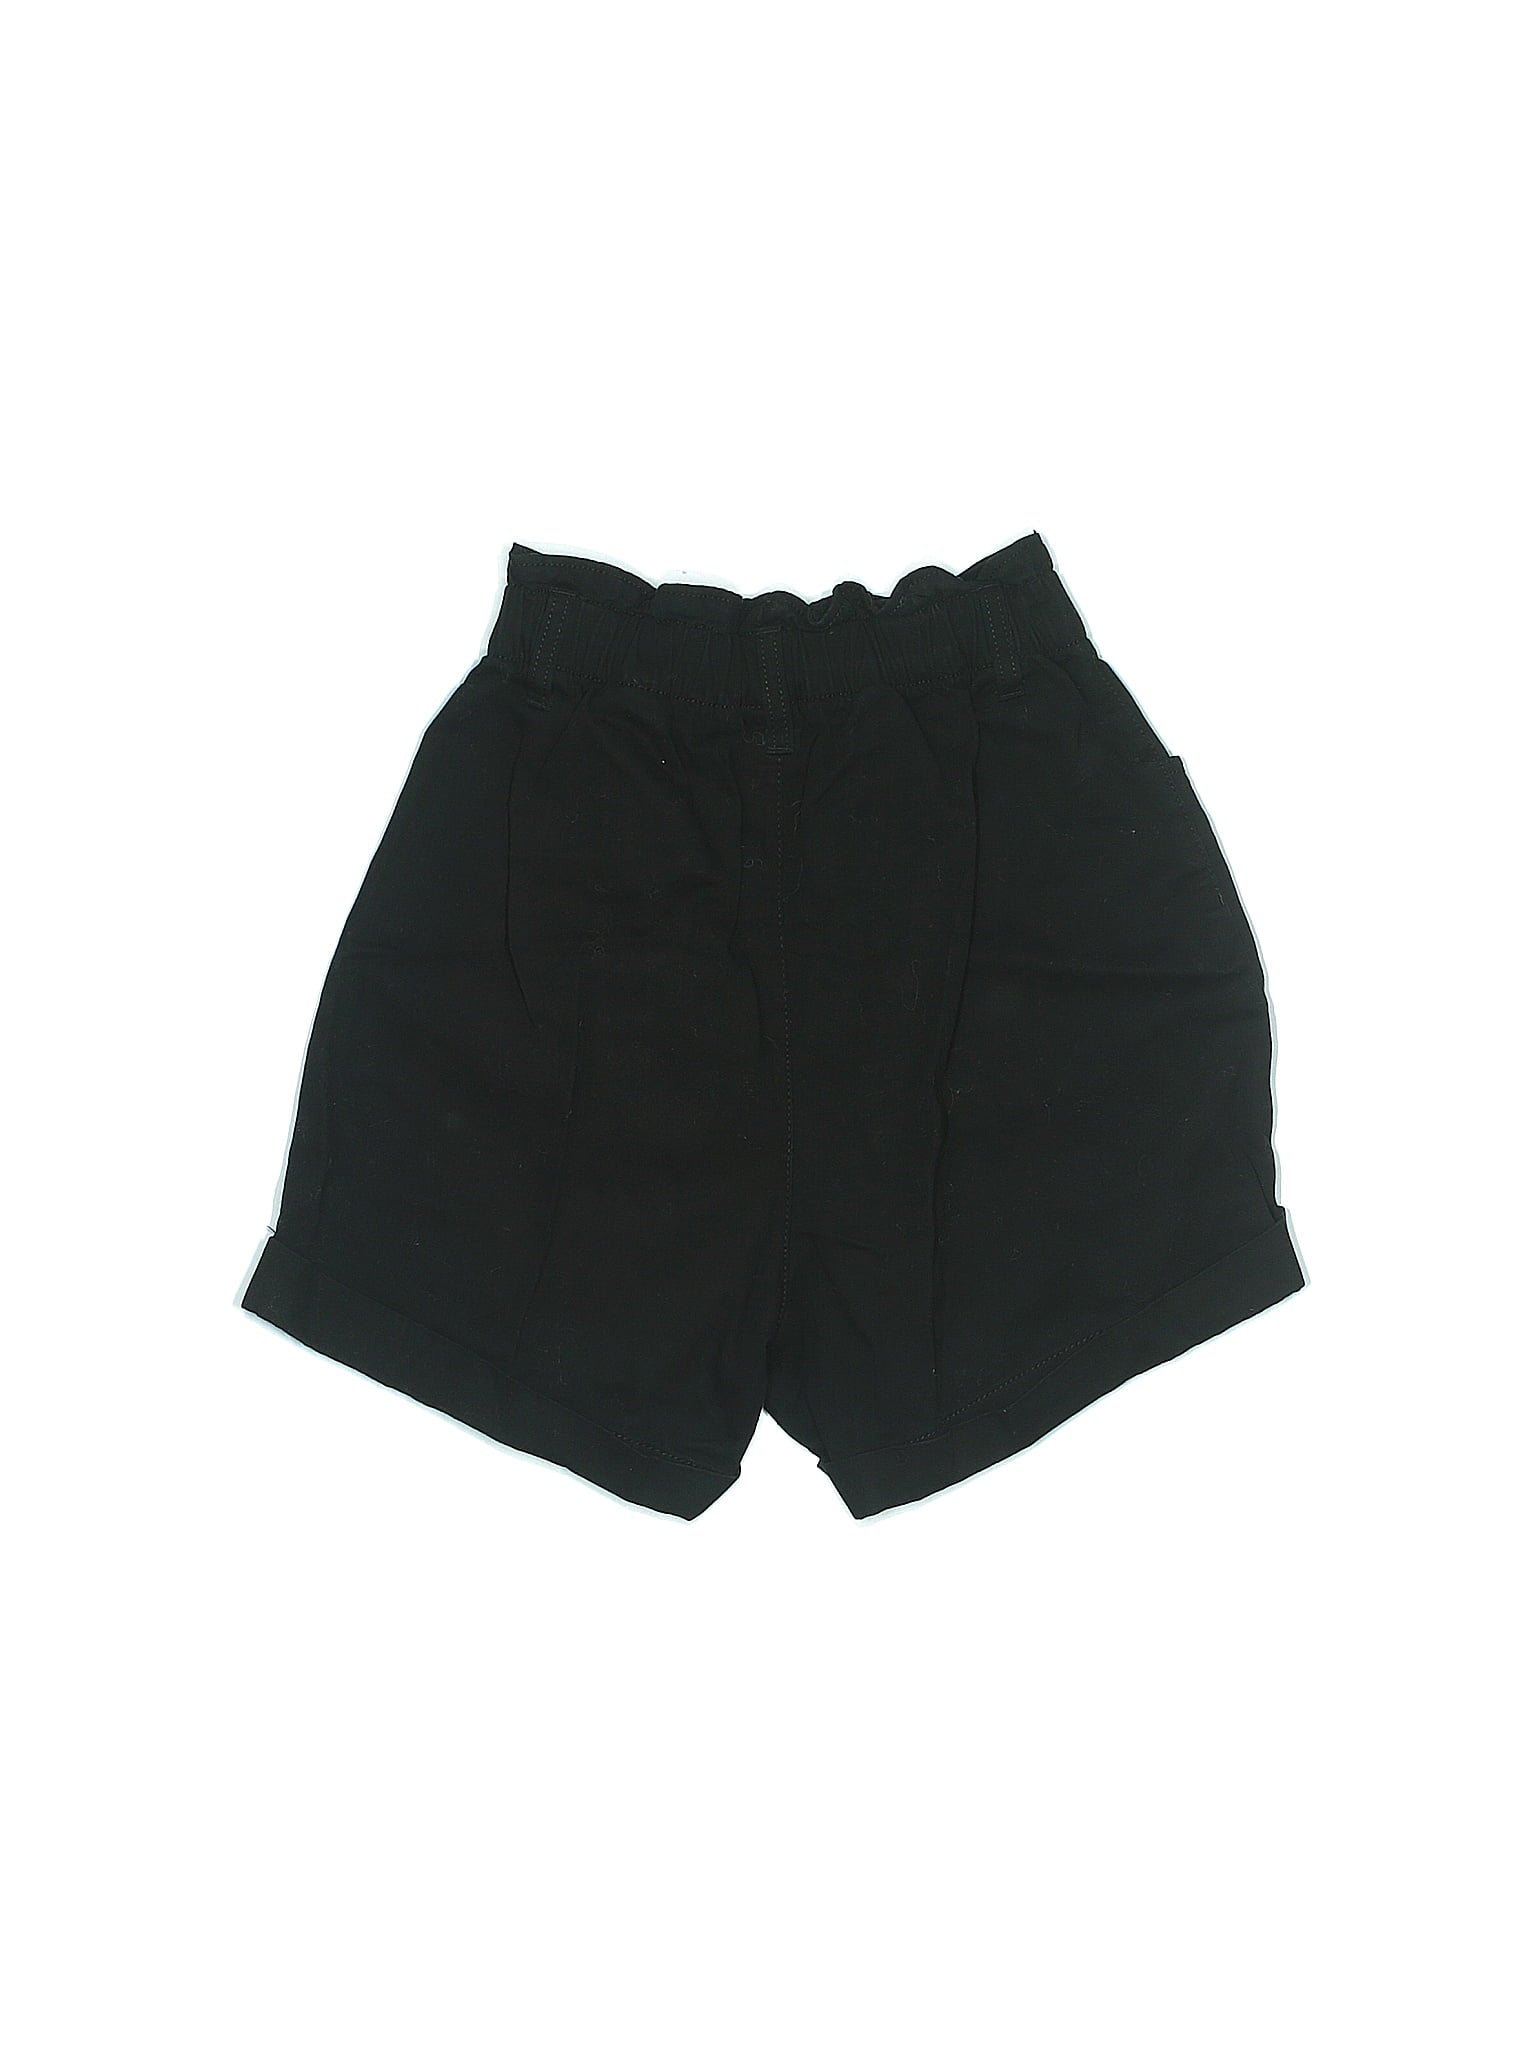 Khaki Shorts size - XS